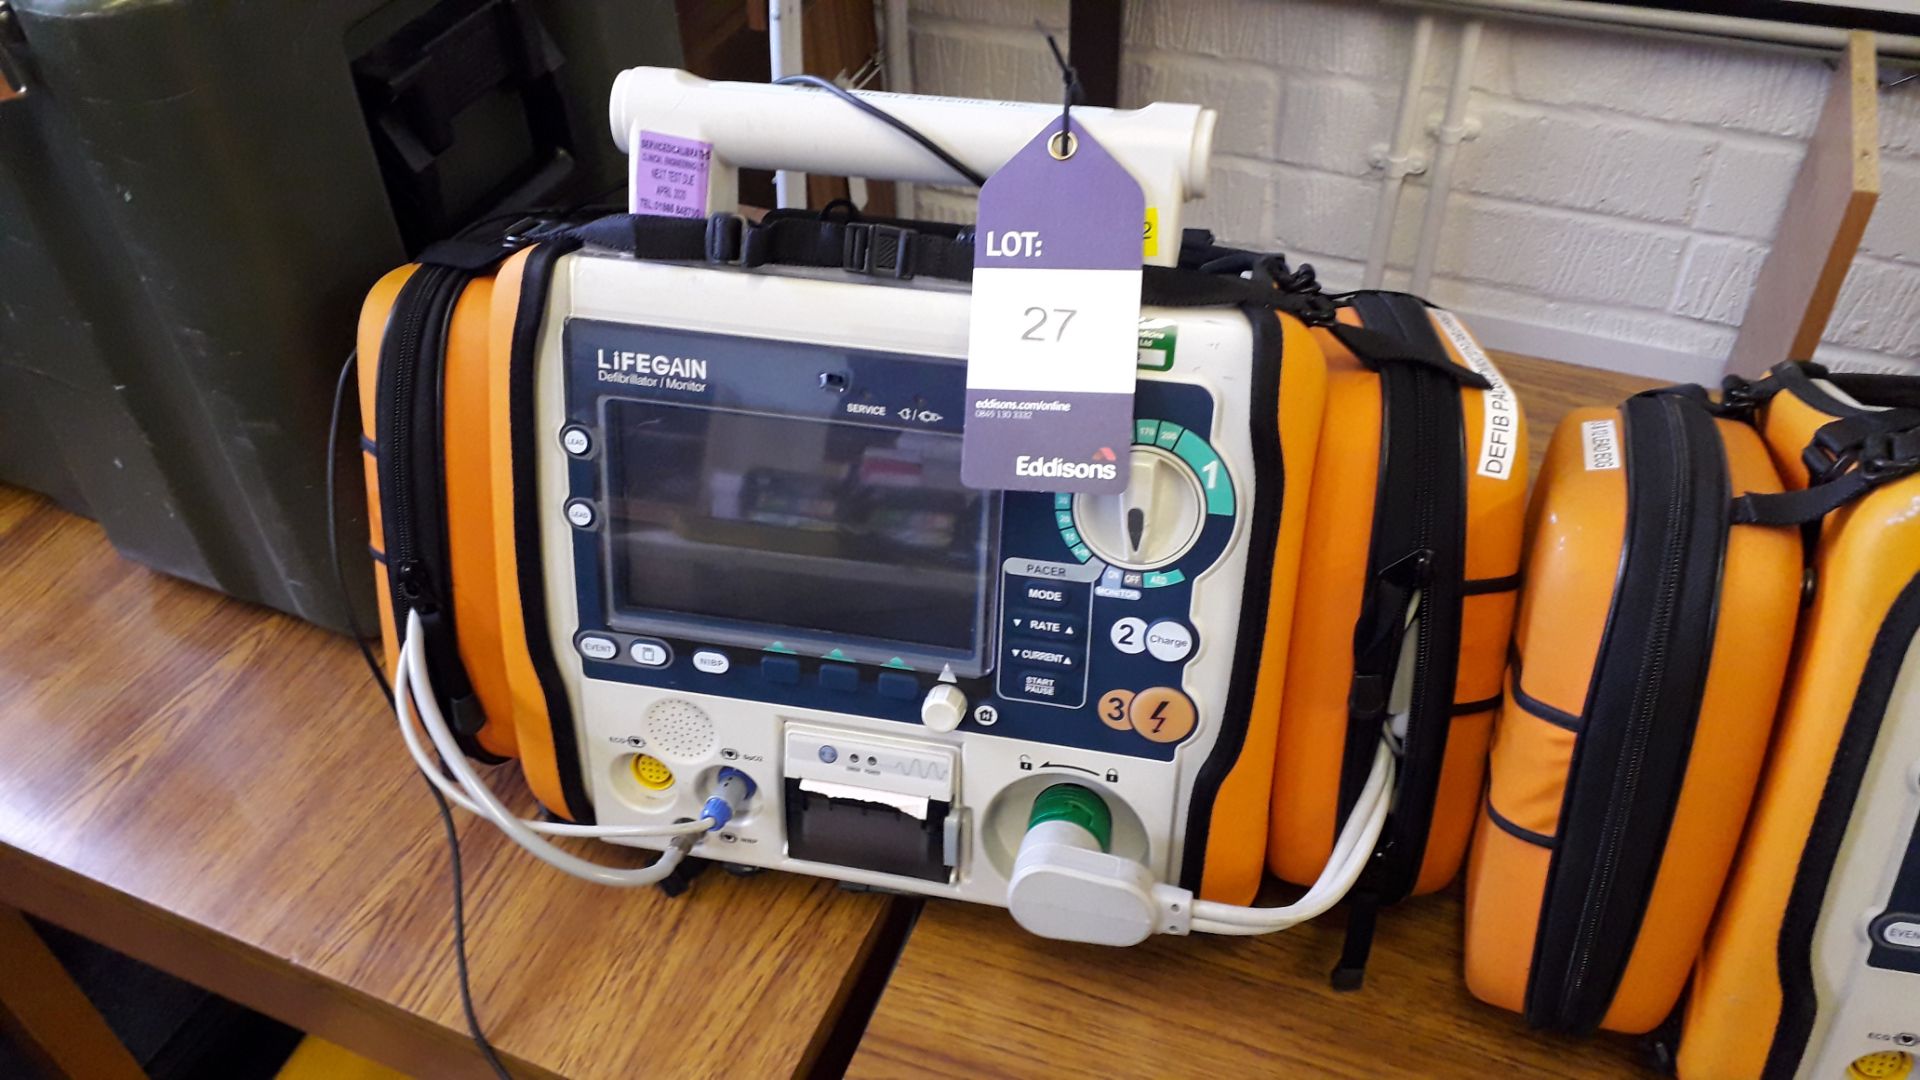 Lifegain Defibrillator/Monitor Model: CU-RLB1 CU M